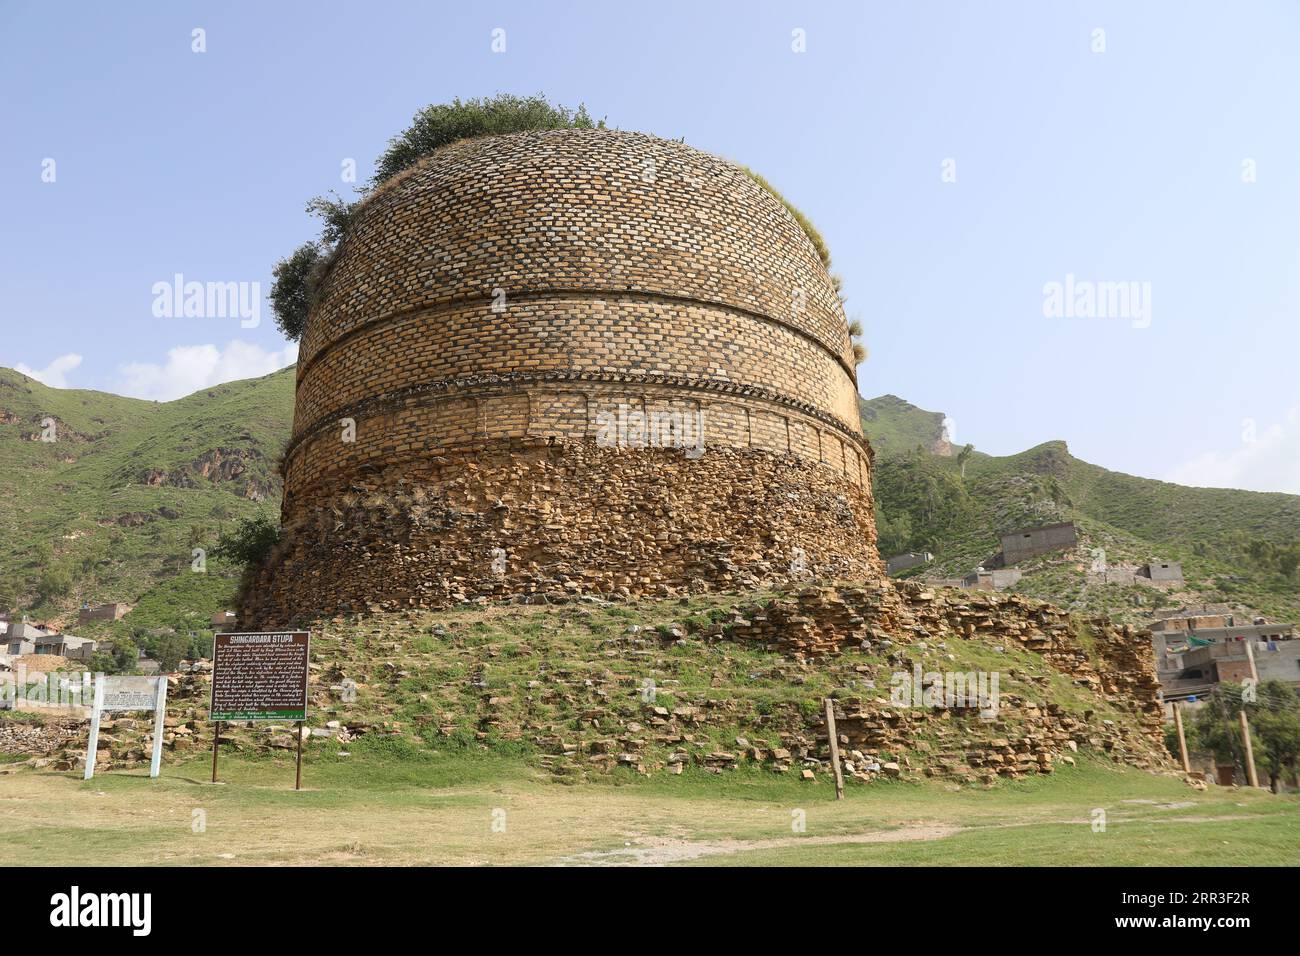 Shingardara Stupa in the Swat Valley of Pakistan Stock Photo